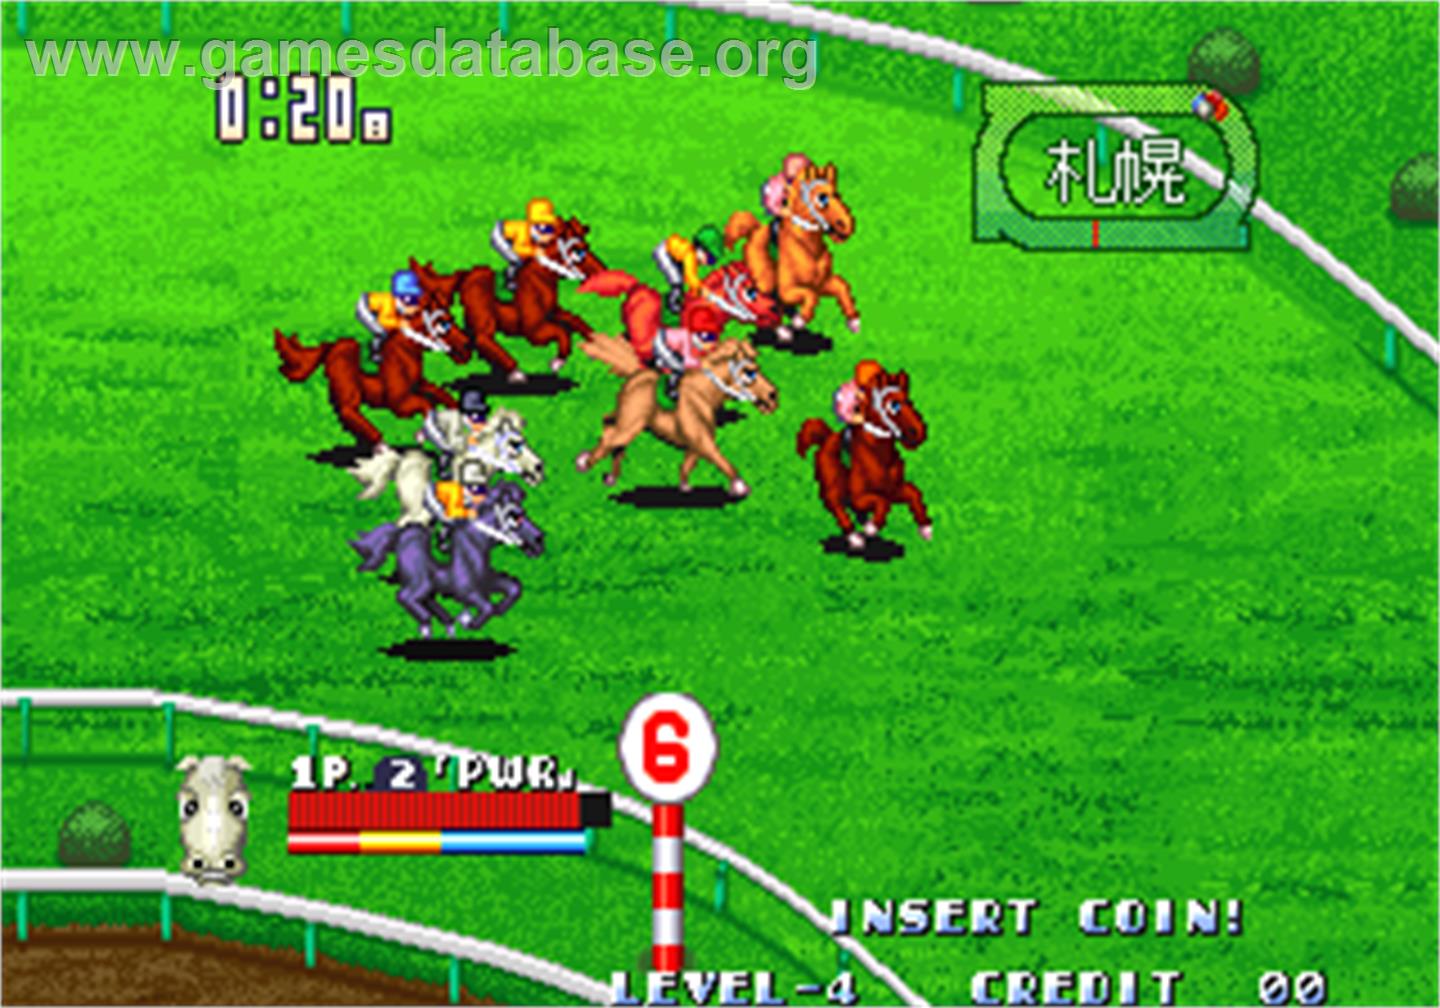 Stakes Winner / Stakes Winner - GI kinzen seihae no michi - Arcade - Artwork - In Game